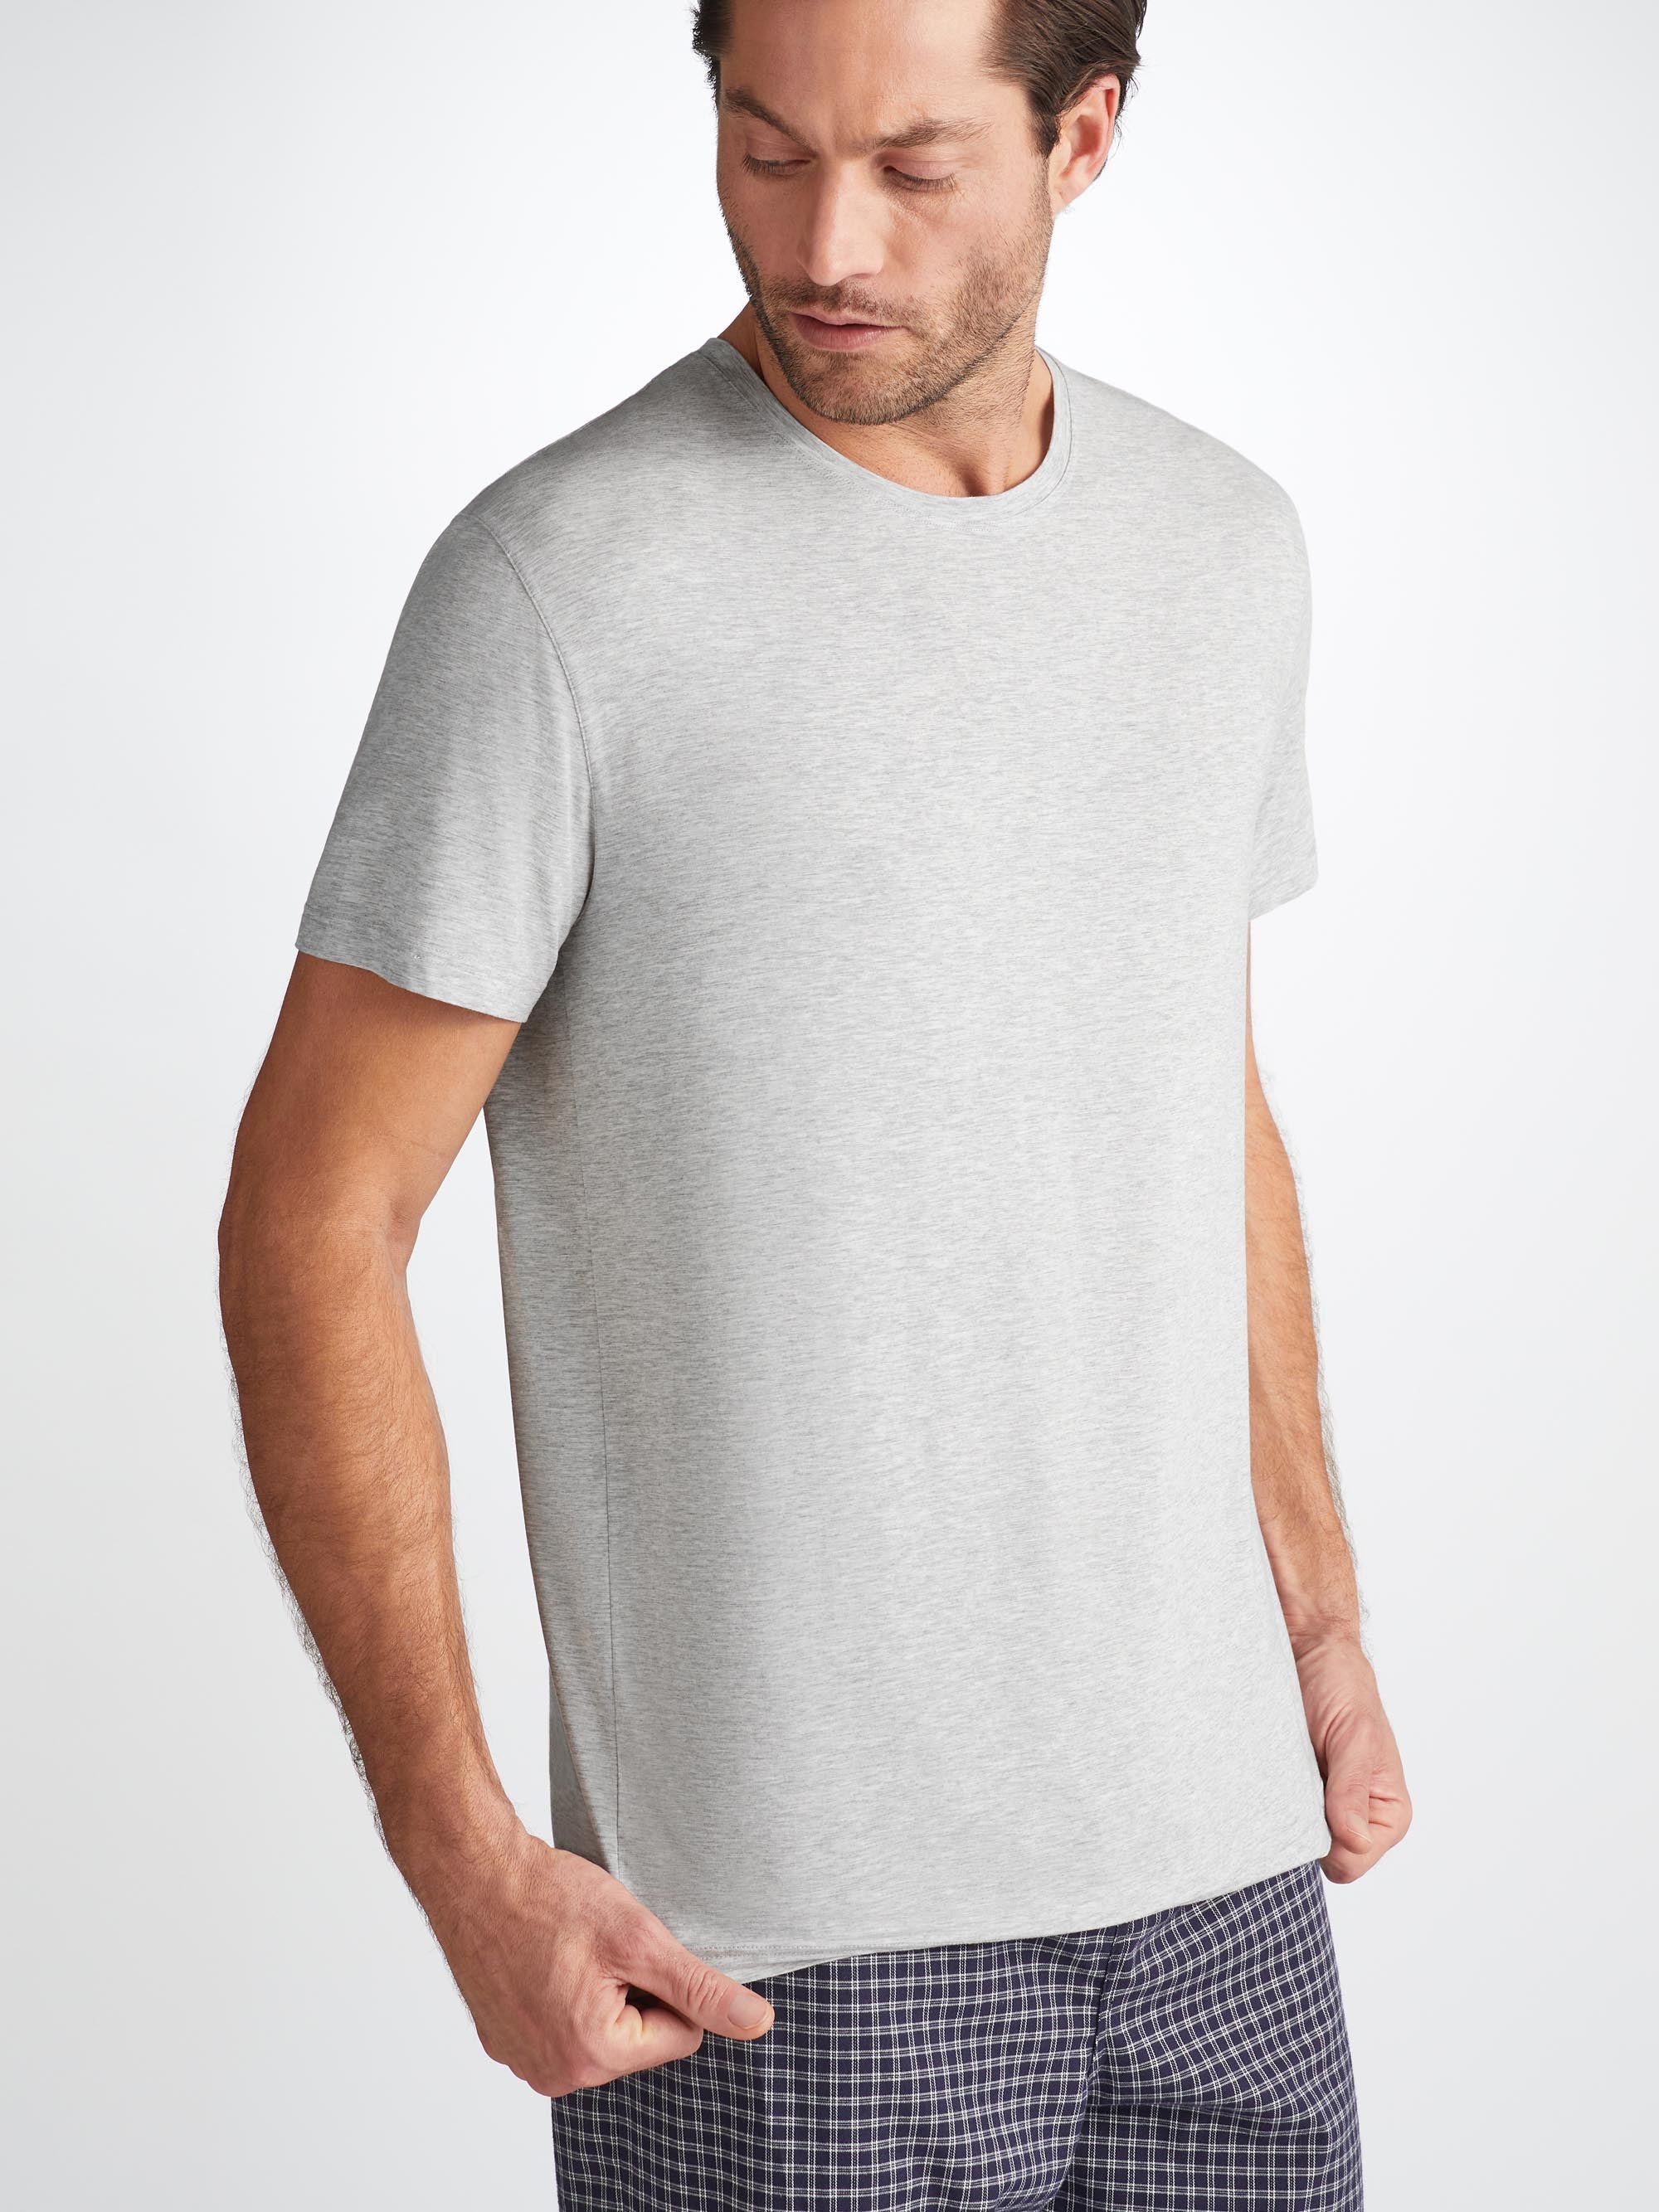 Men's T-Shirt Ethan Micro Modal Stretch Silver Marl